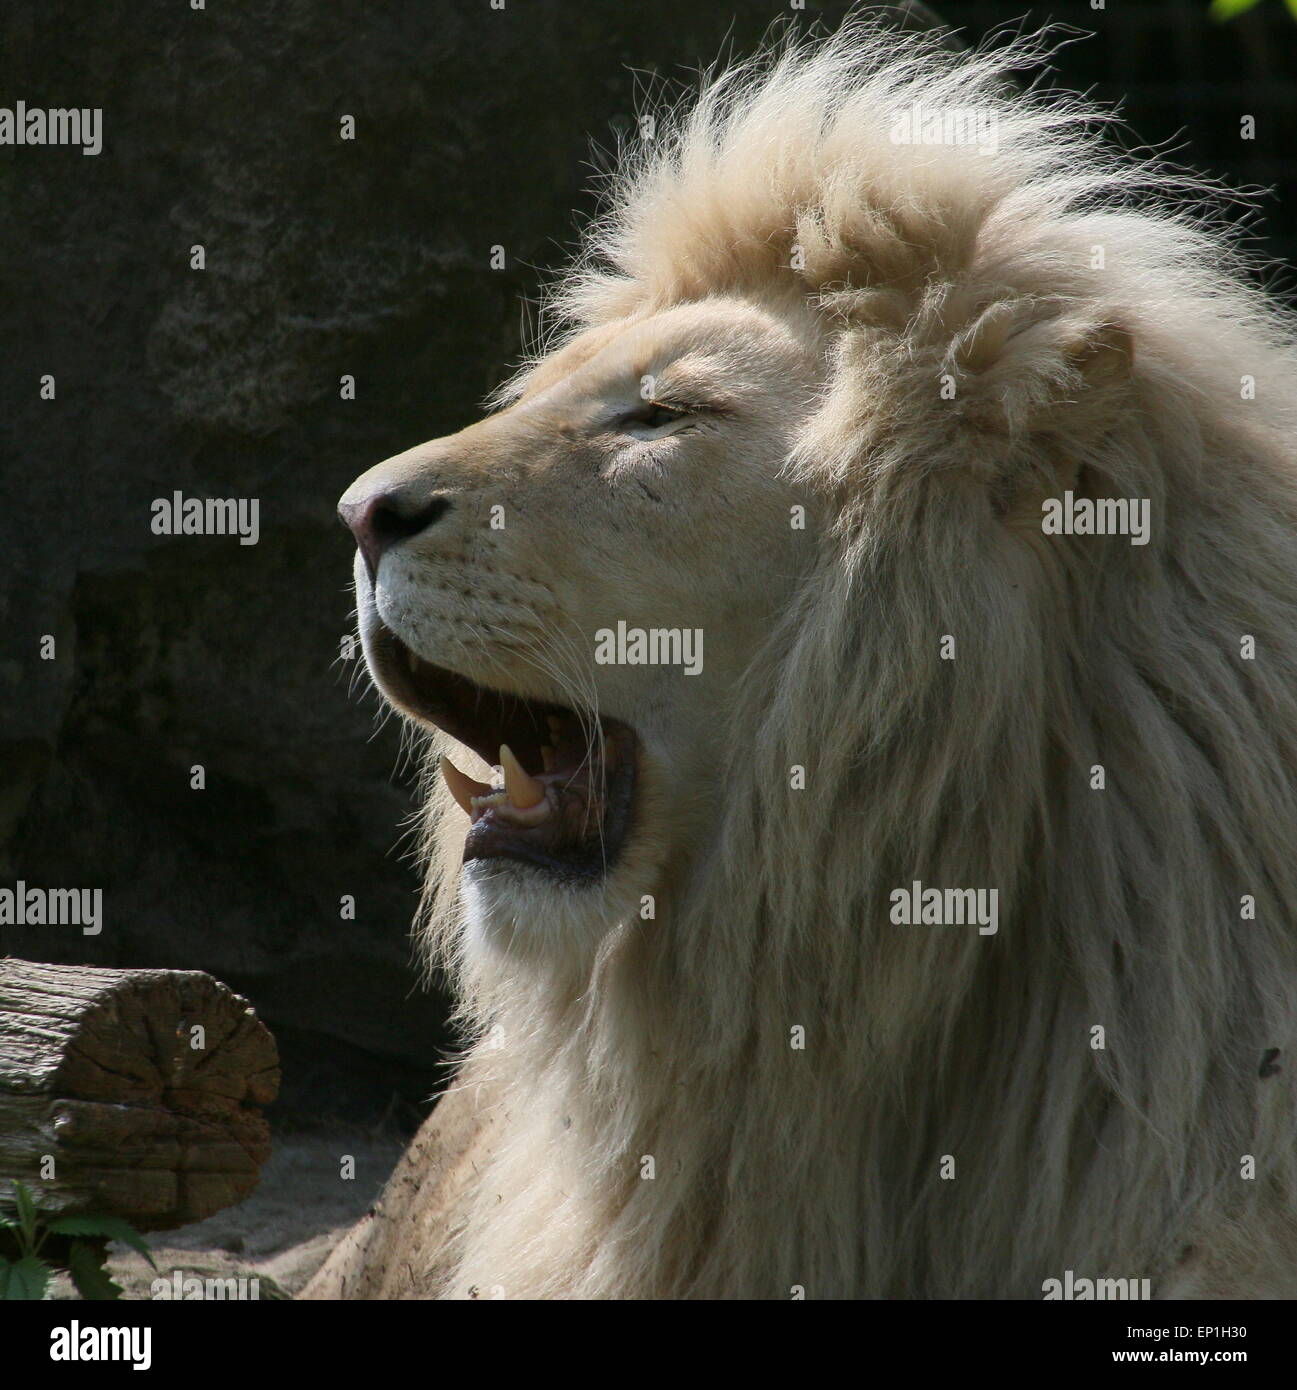 Arrabbiati African maschio bianco lion (Panthera leo Krugeri). Close-up mentre ringhiando Foto Stock